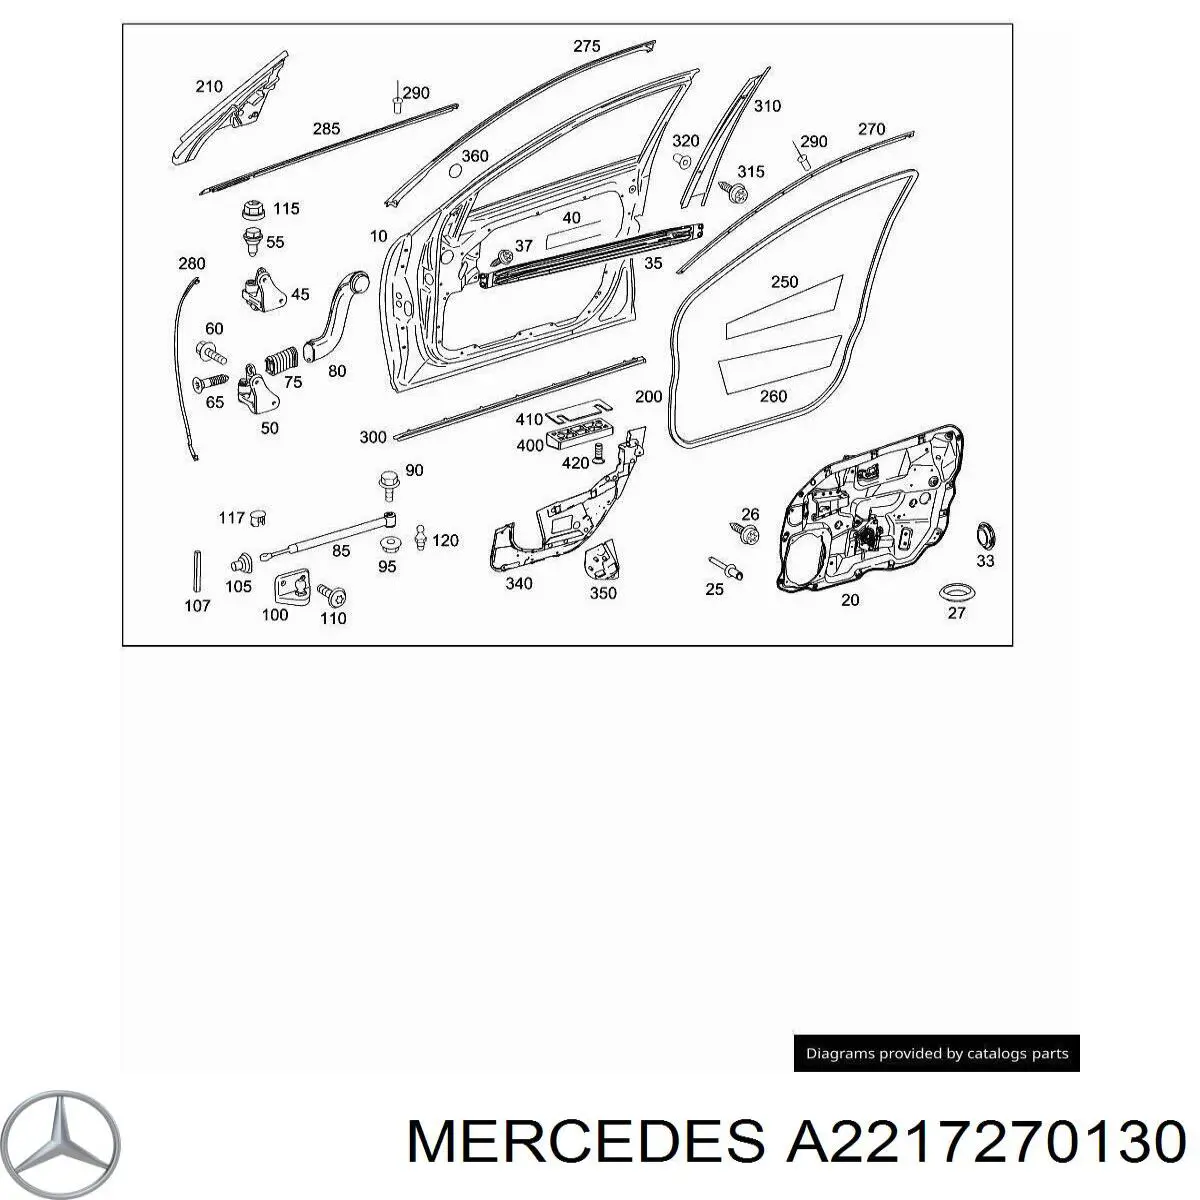 A2217270130 Mercedes направляющая стекла рамки двери передней левой